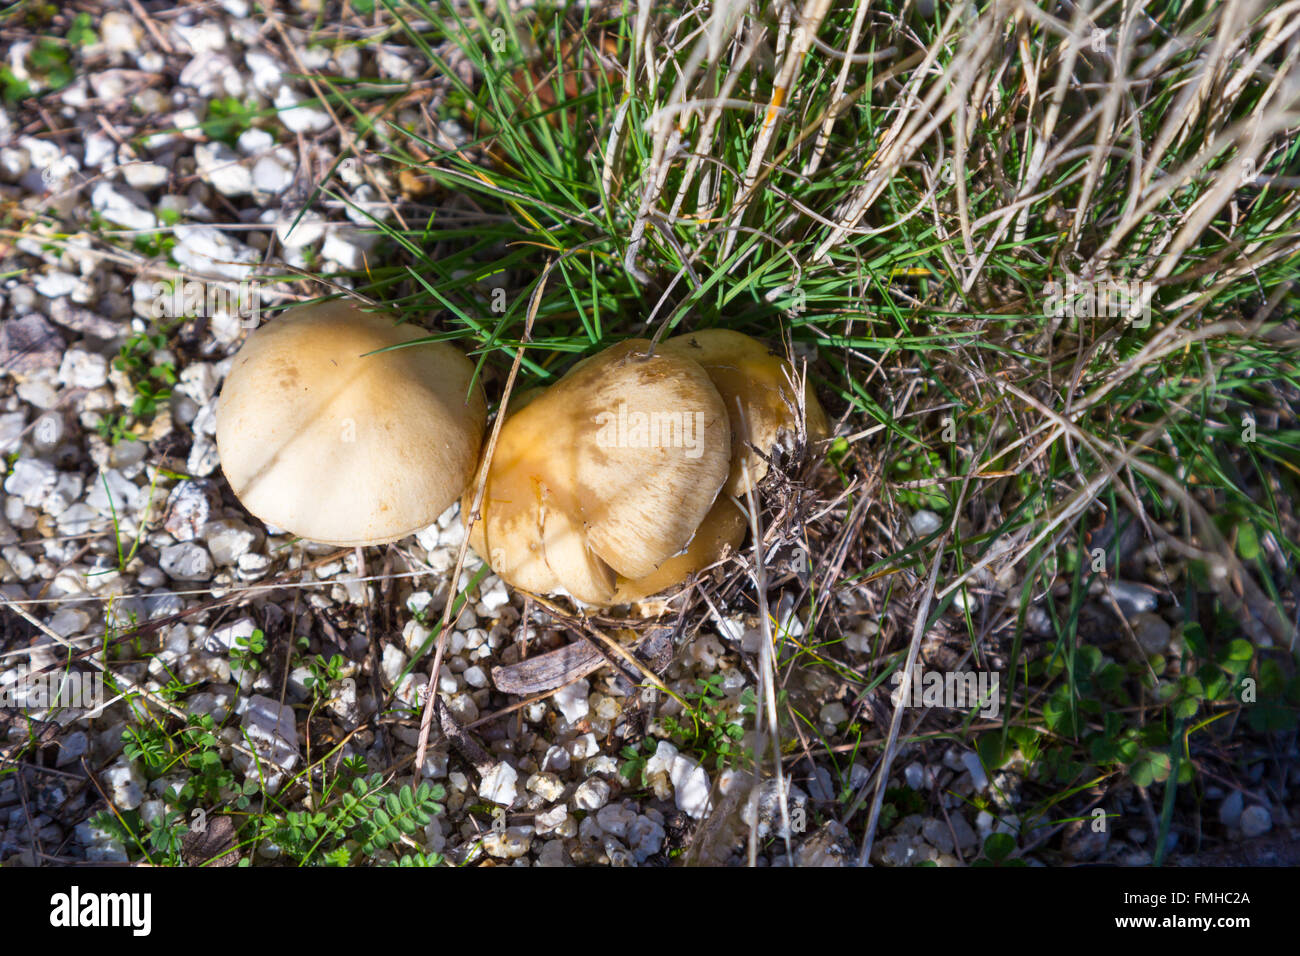 Wild mushrooms in the ground Stock Photo